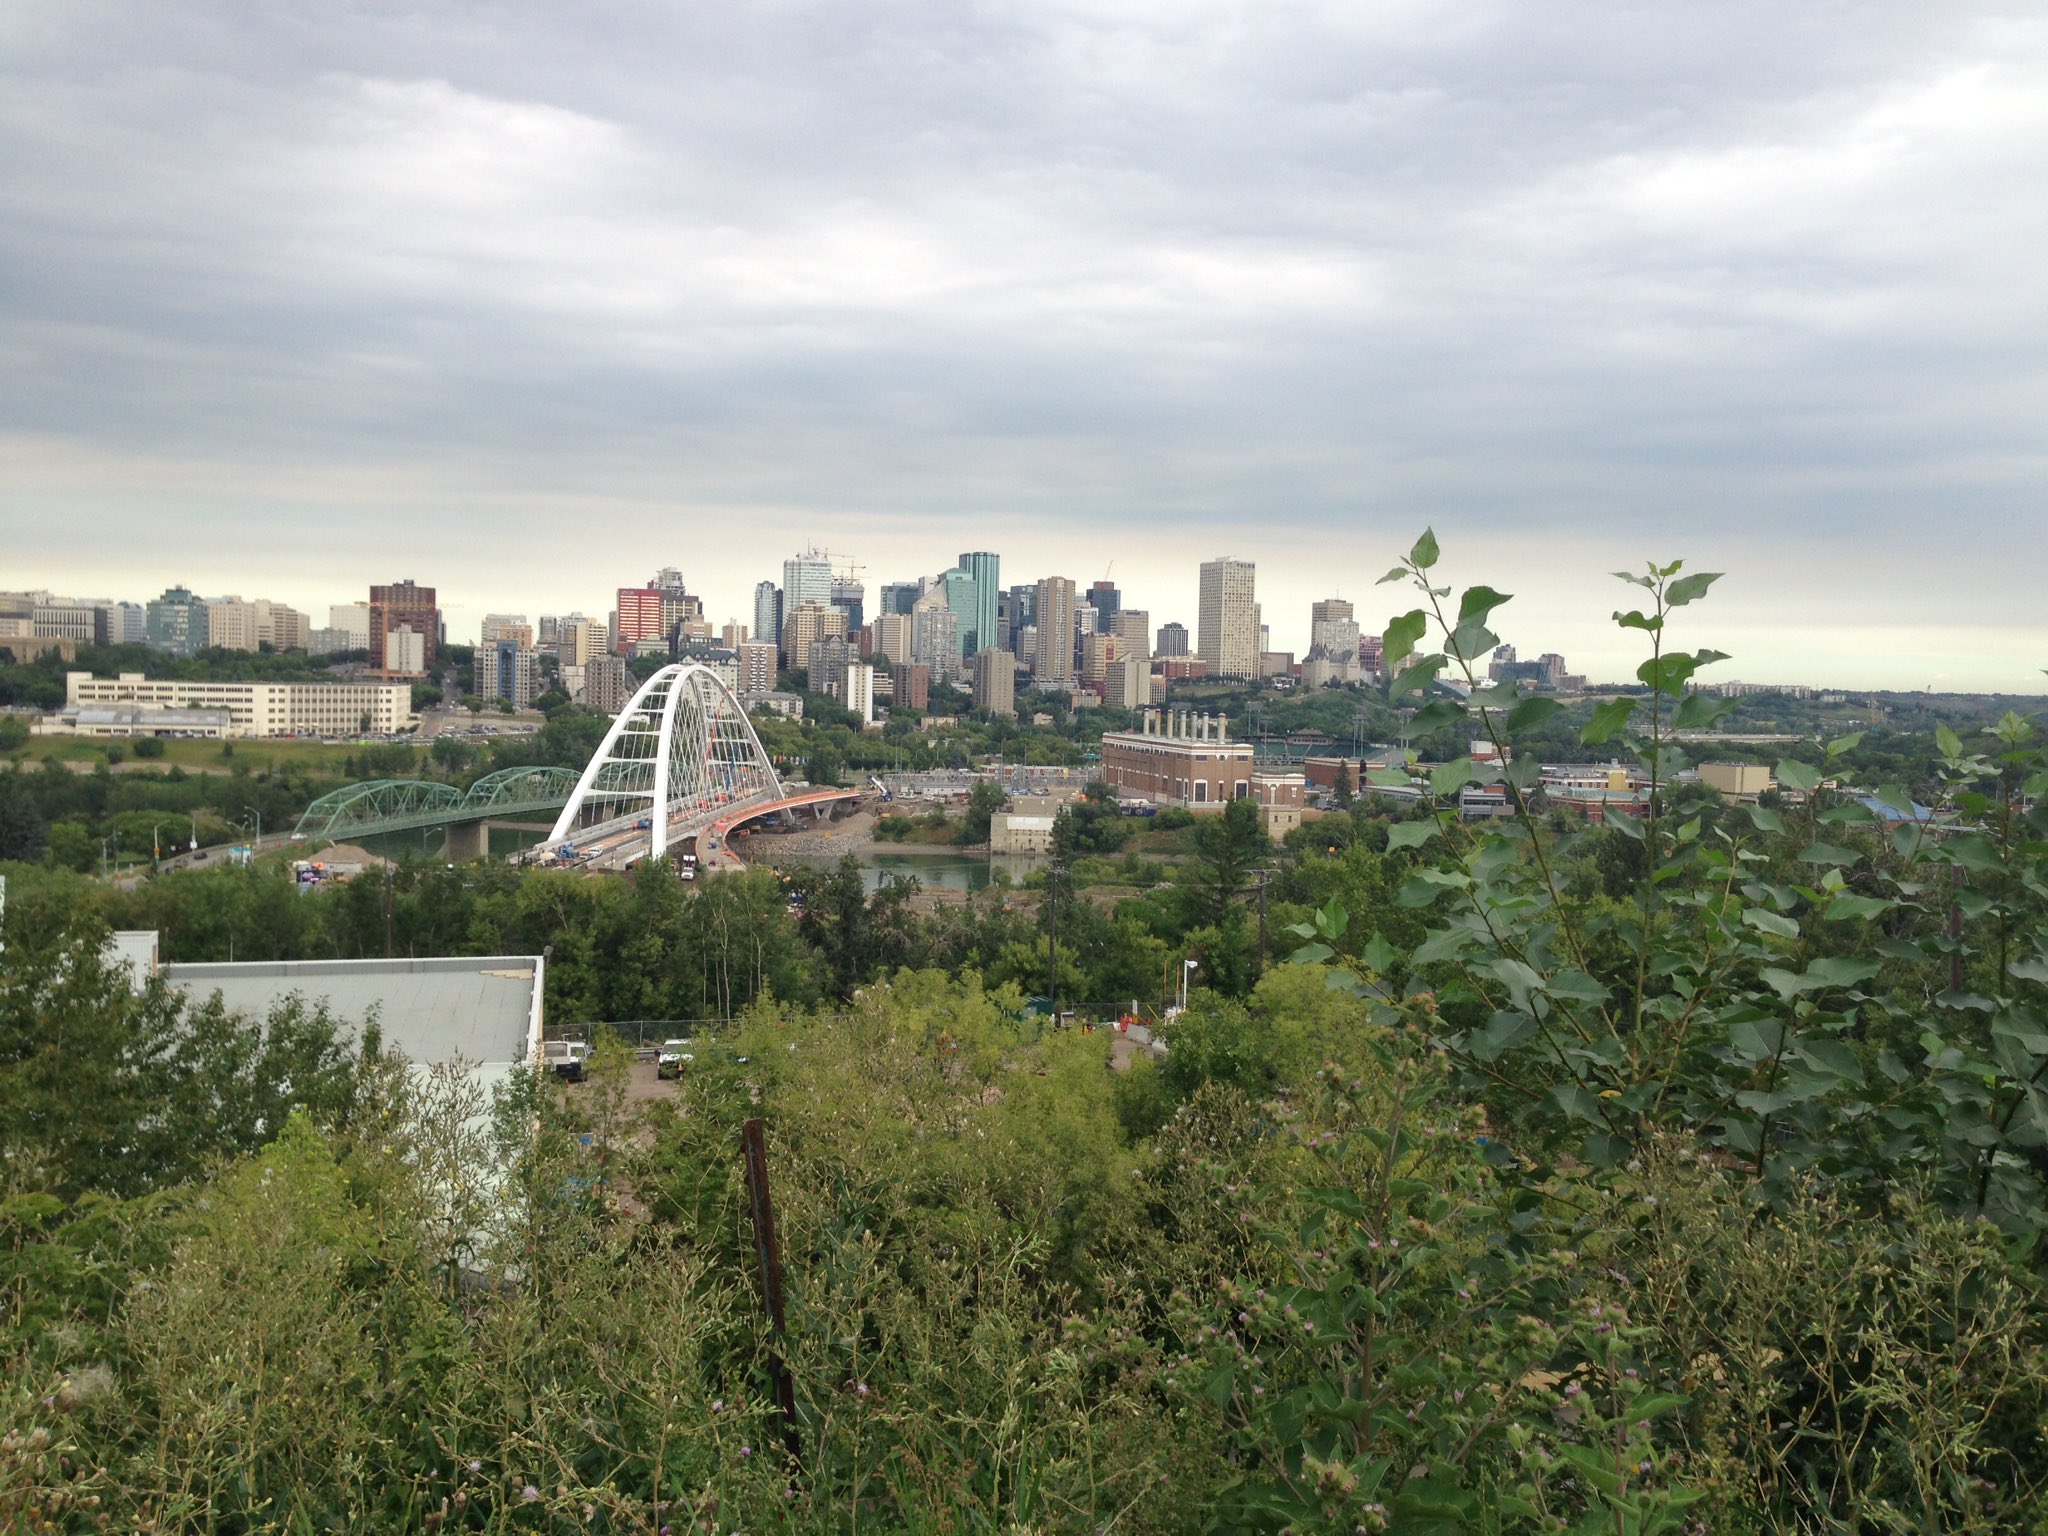 by Edmonton skyline, set fra Saskatchevan Drive den 31. Juli 2017.